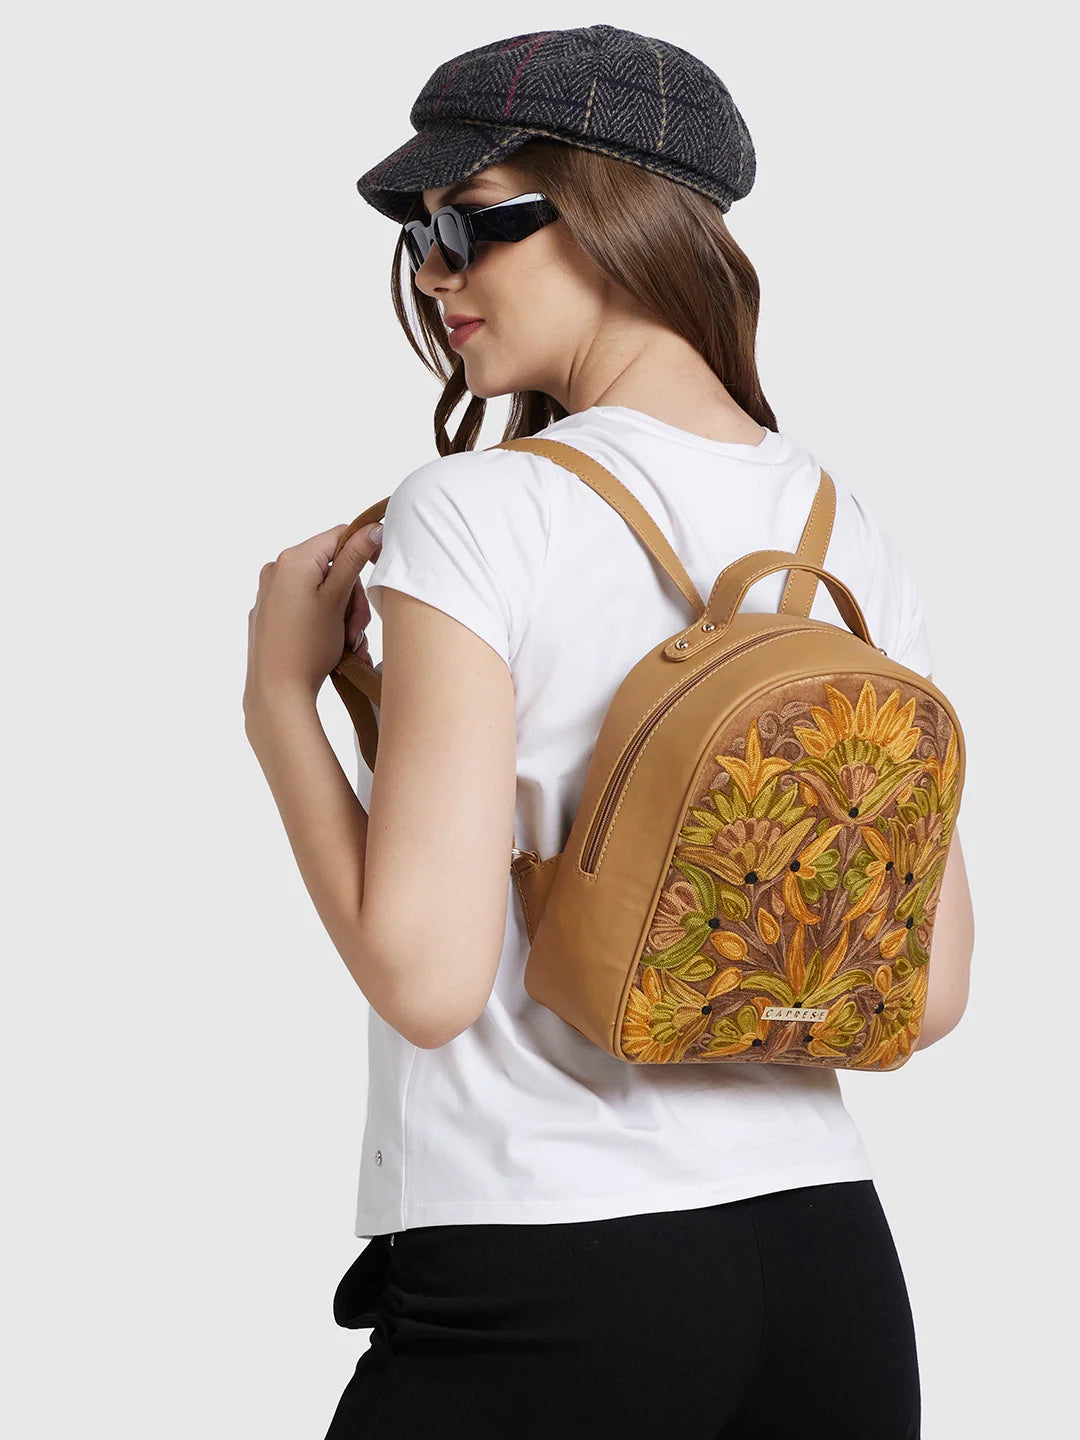 Caprese Tresna Embroidery Backpack Handbag